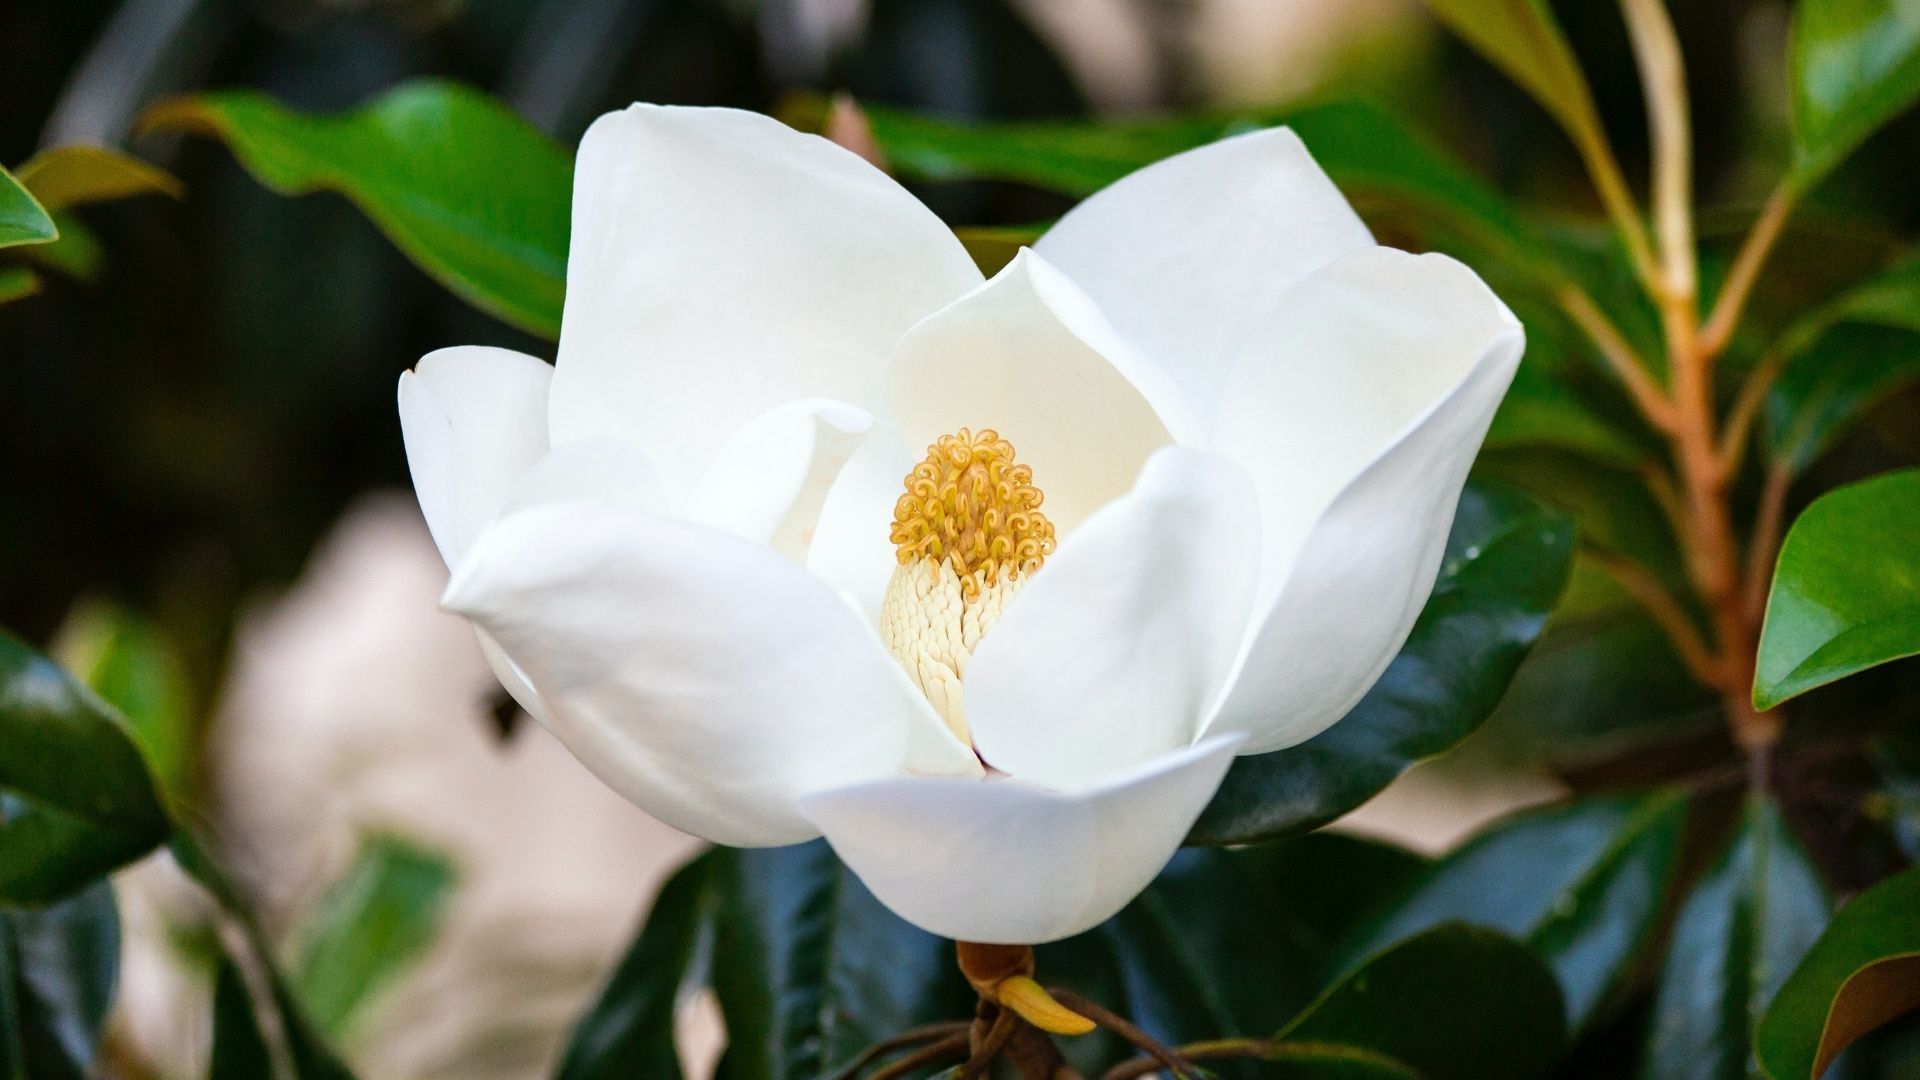 Most beautiful flowers: Magnolia